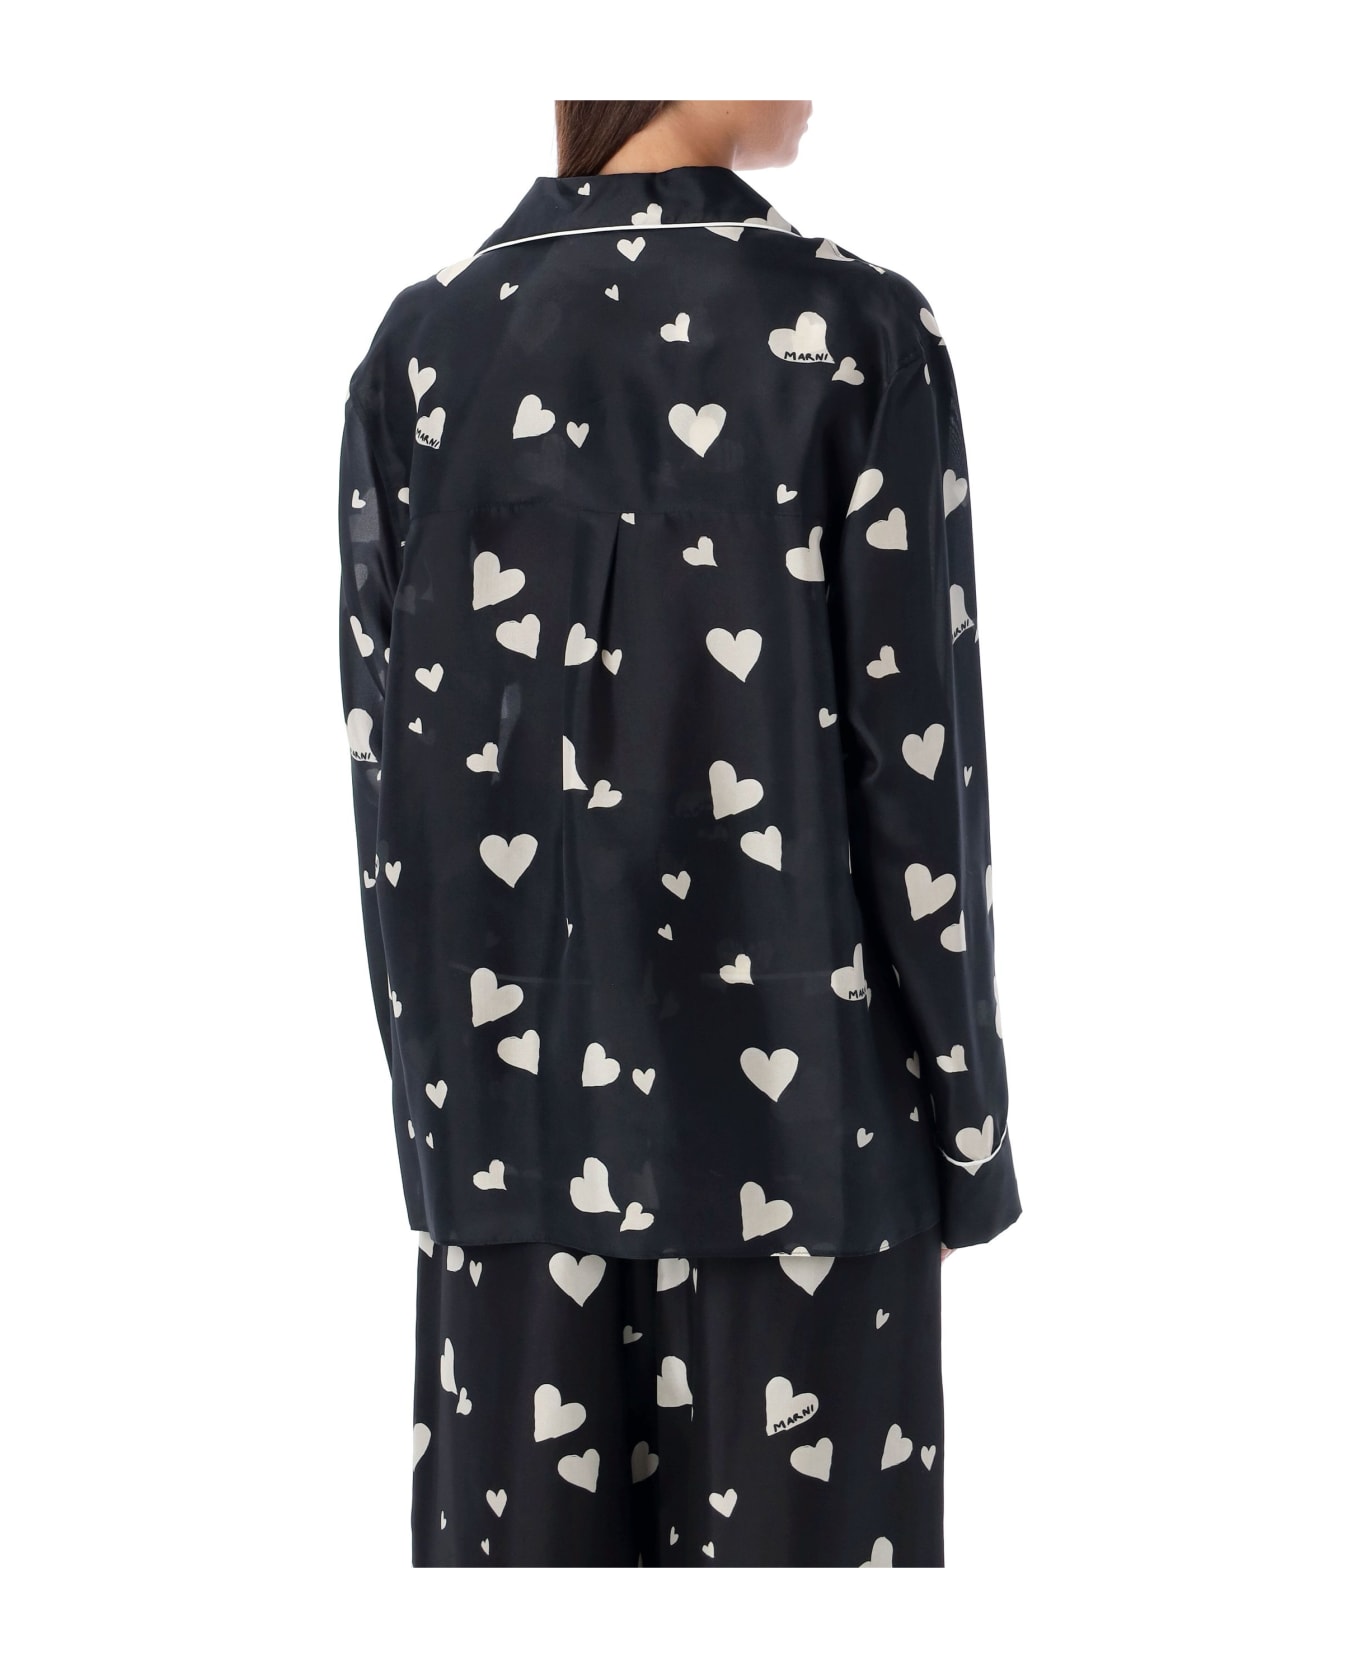 Marni Pijama Shirt - BLACK